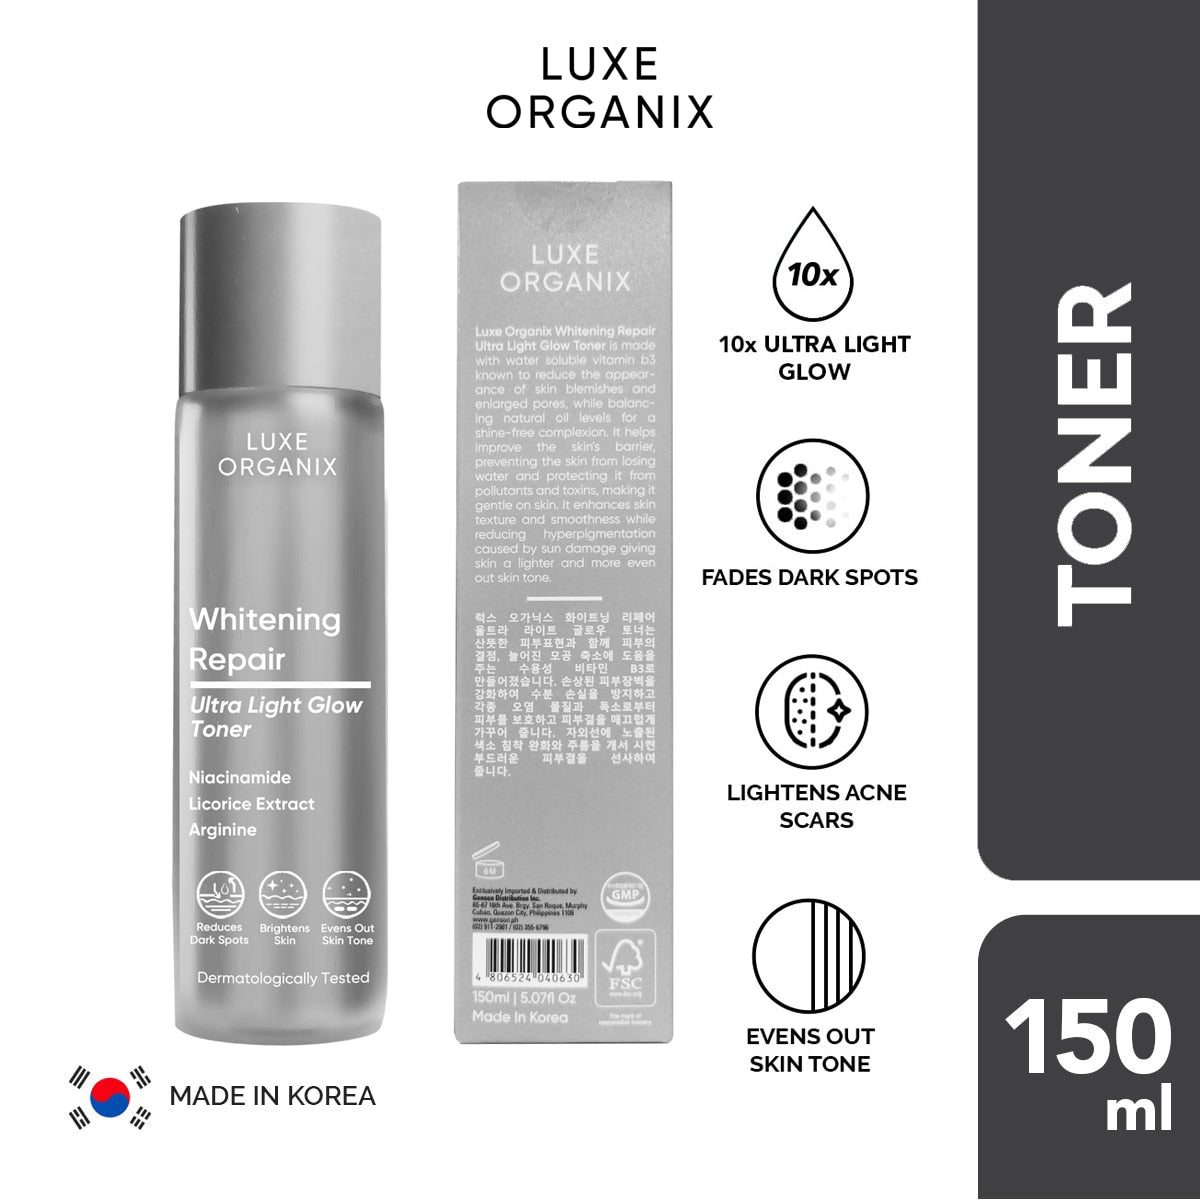 Luxe Organix Whitening Repair Essence Toner